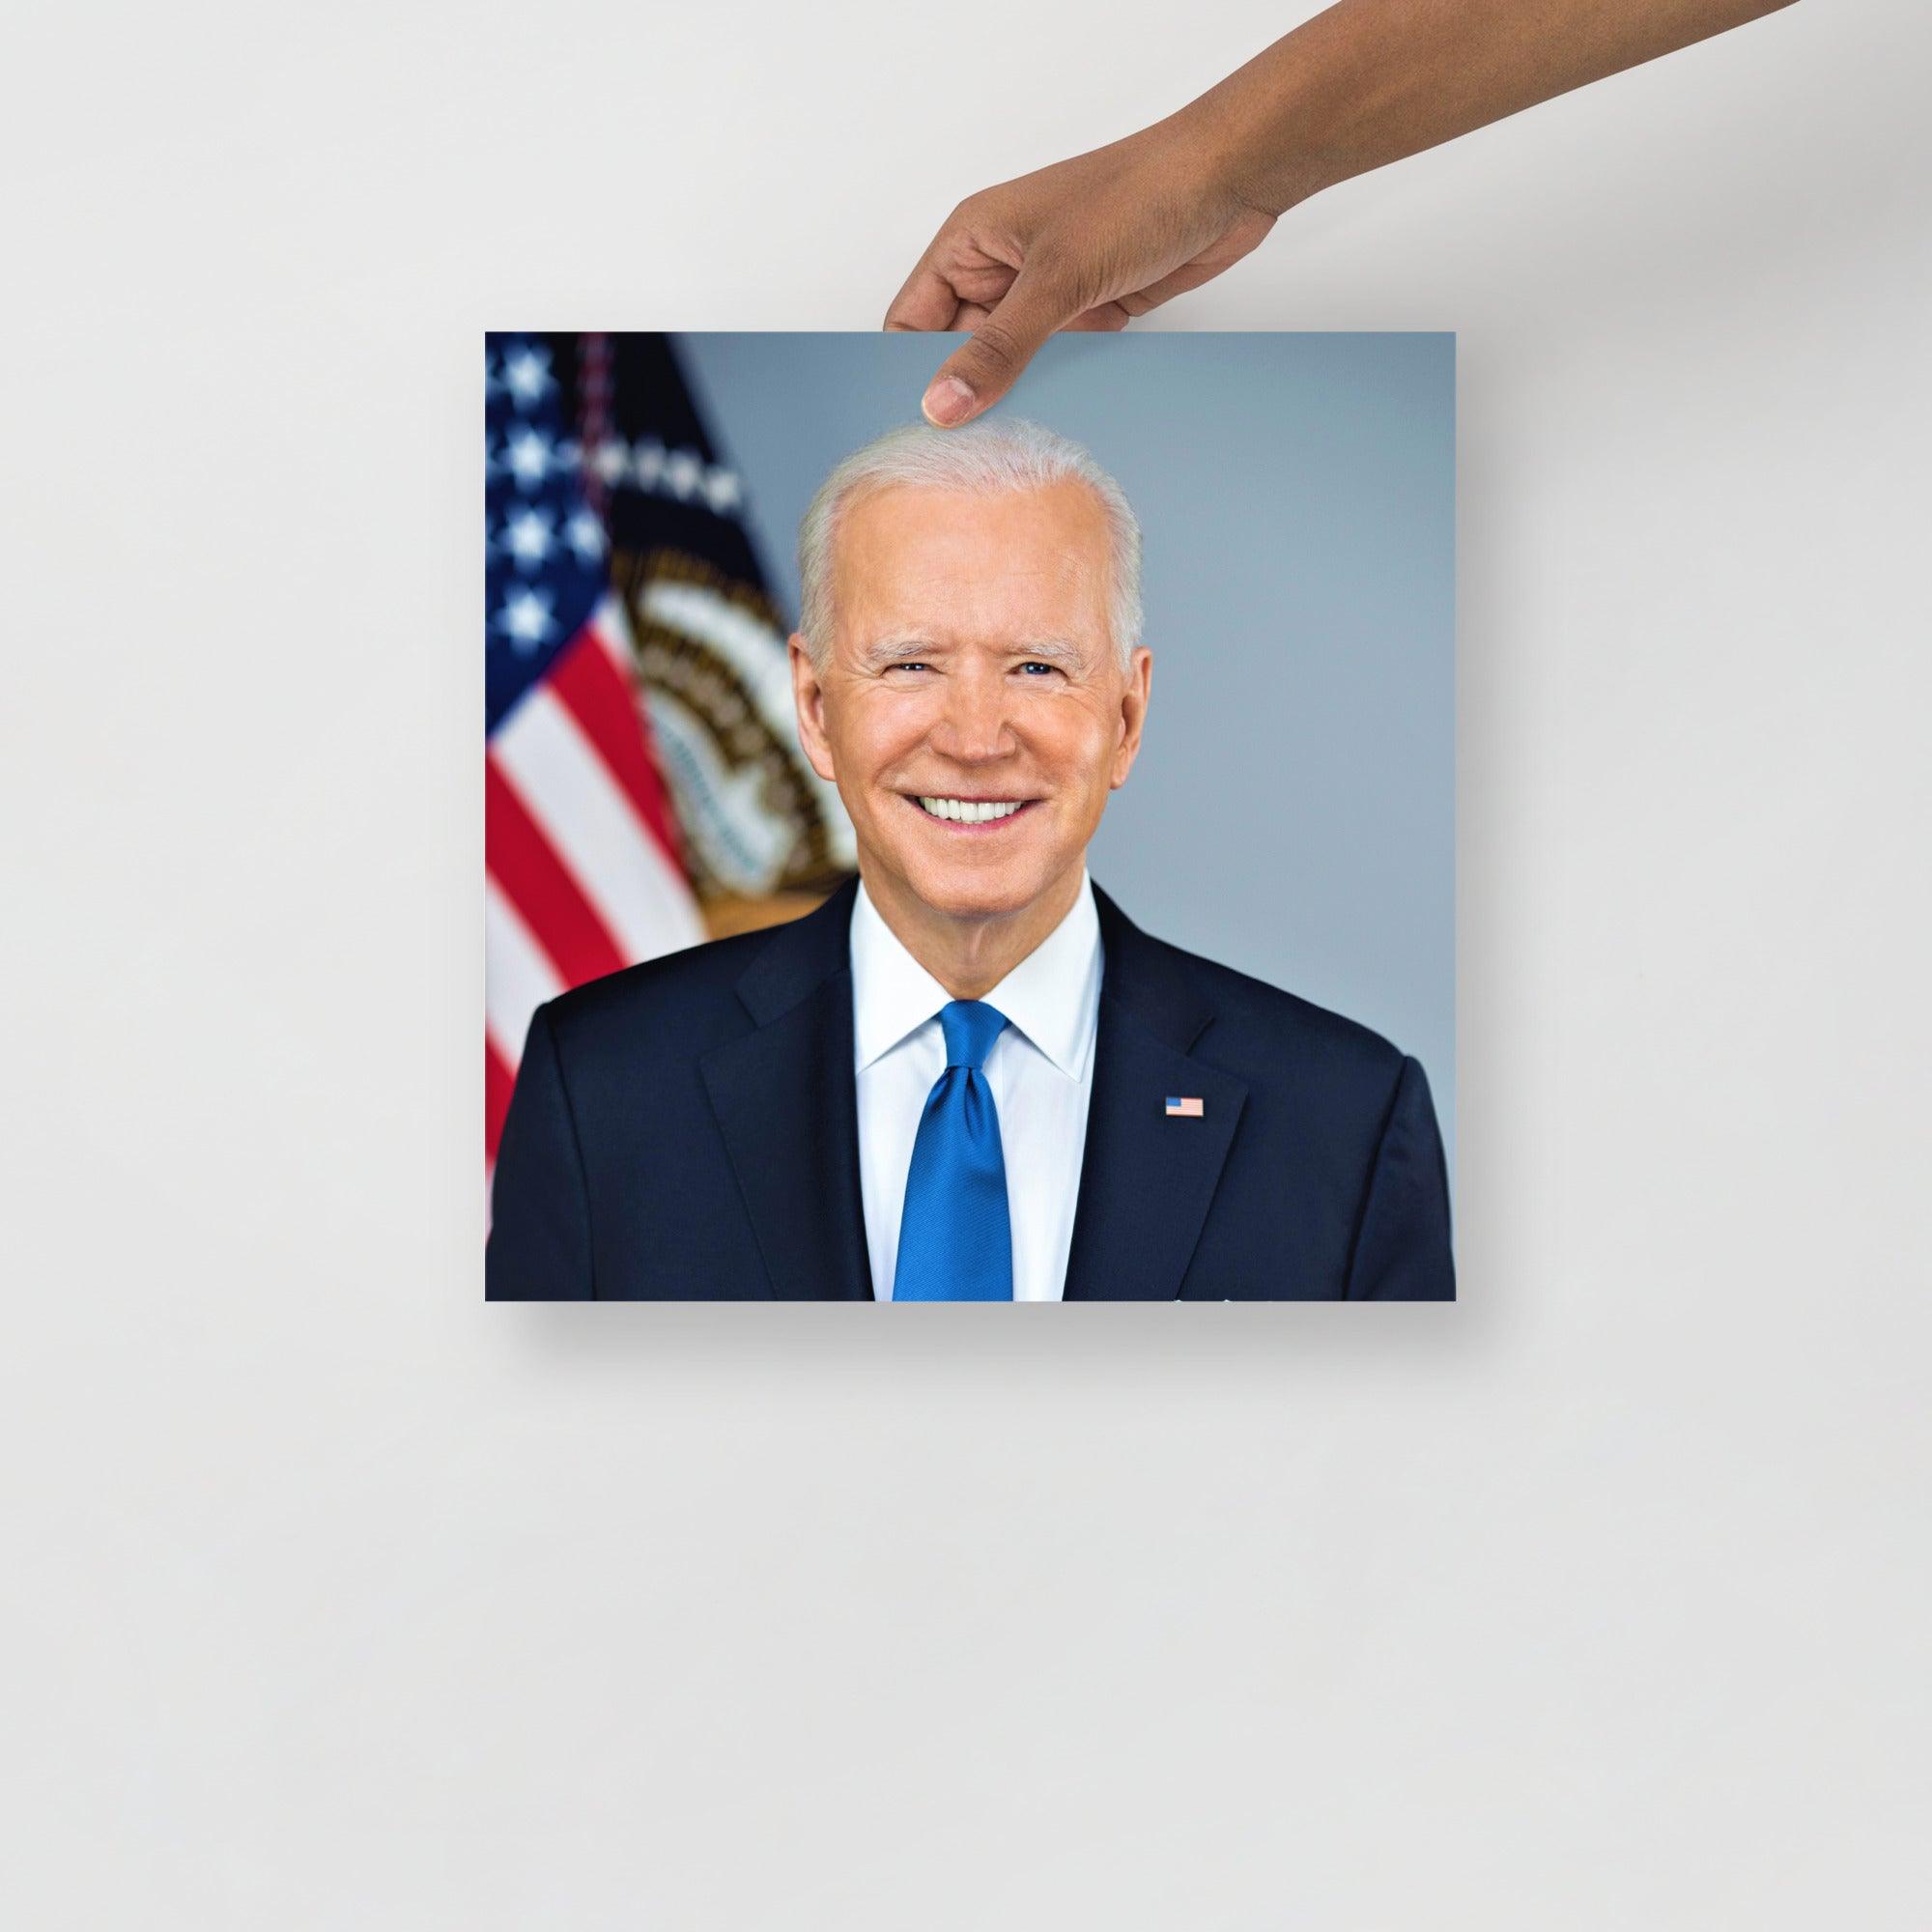 A Joe Biden Official Portrait poster on a plain backdrop in size 14x14”.